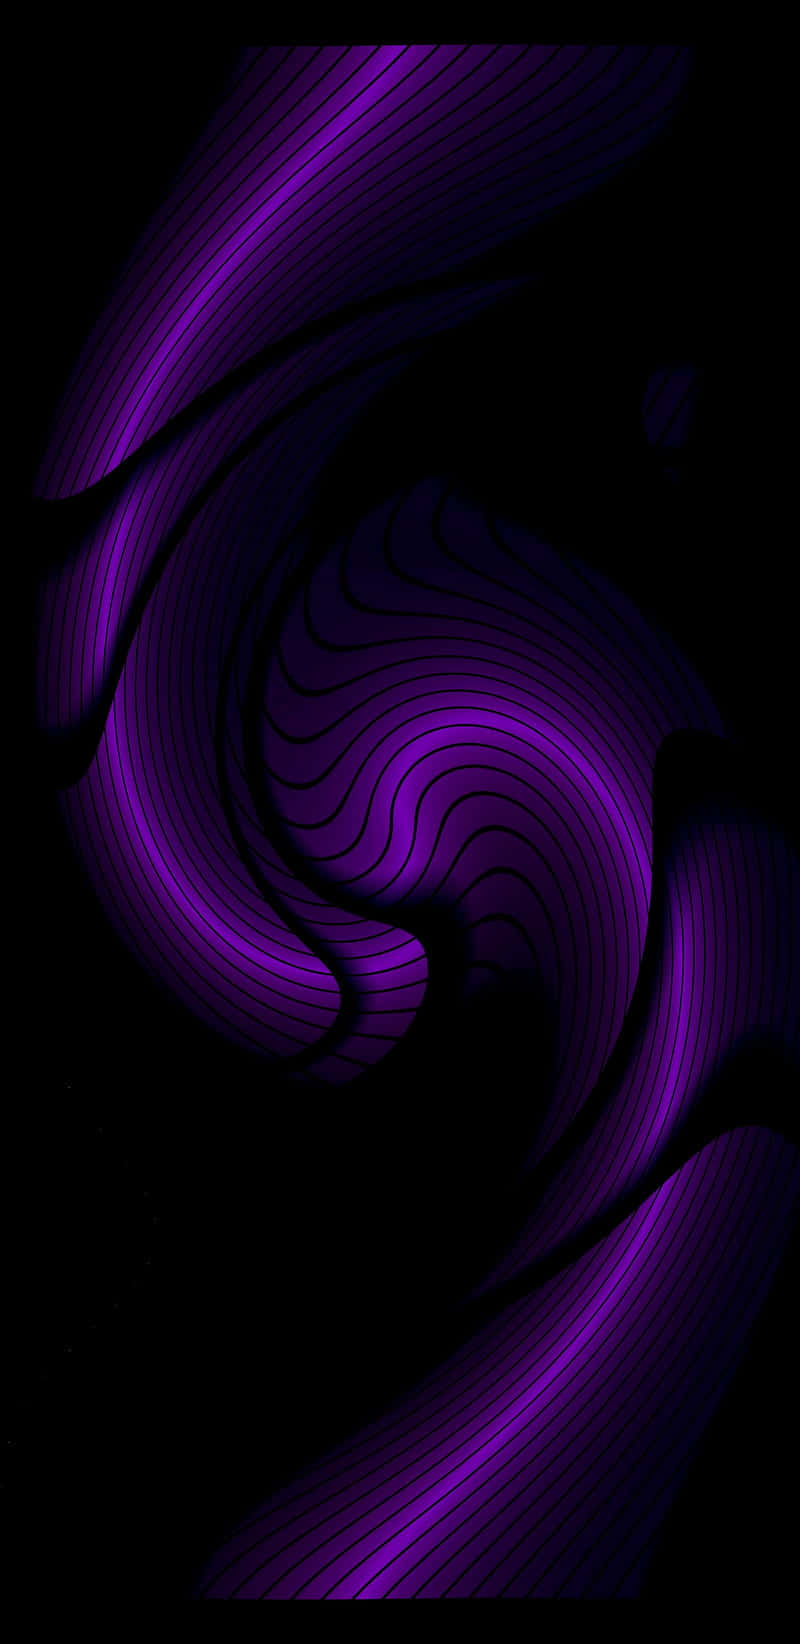 Purple Swirls On A Black Background